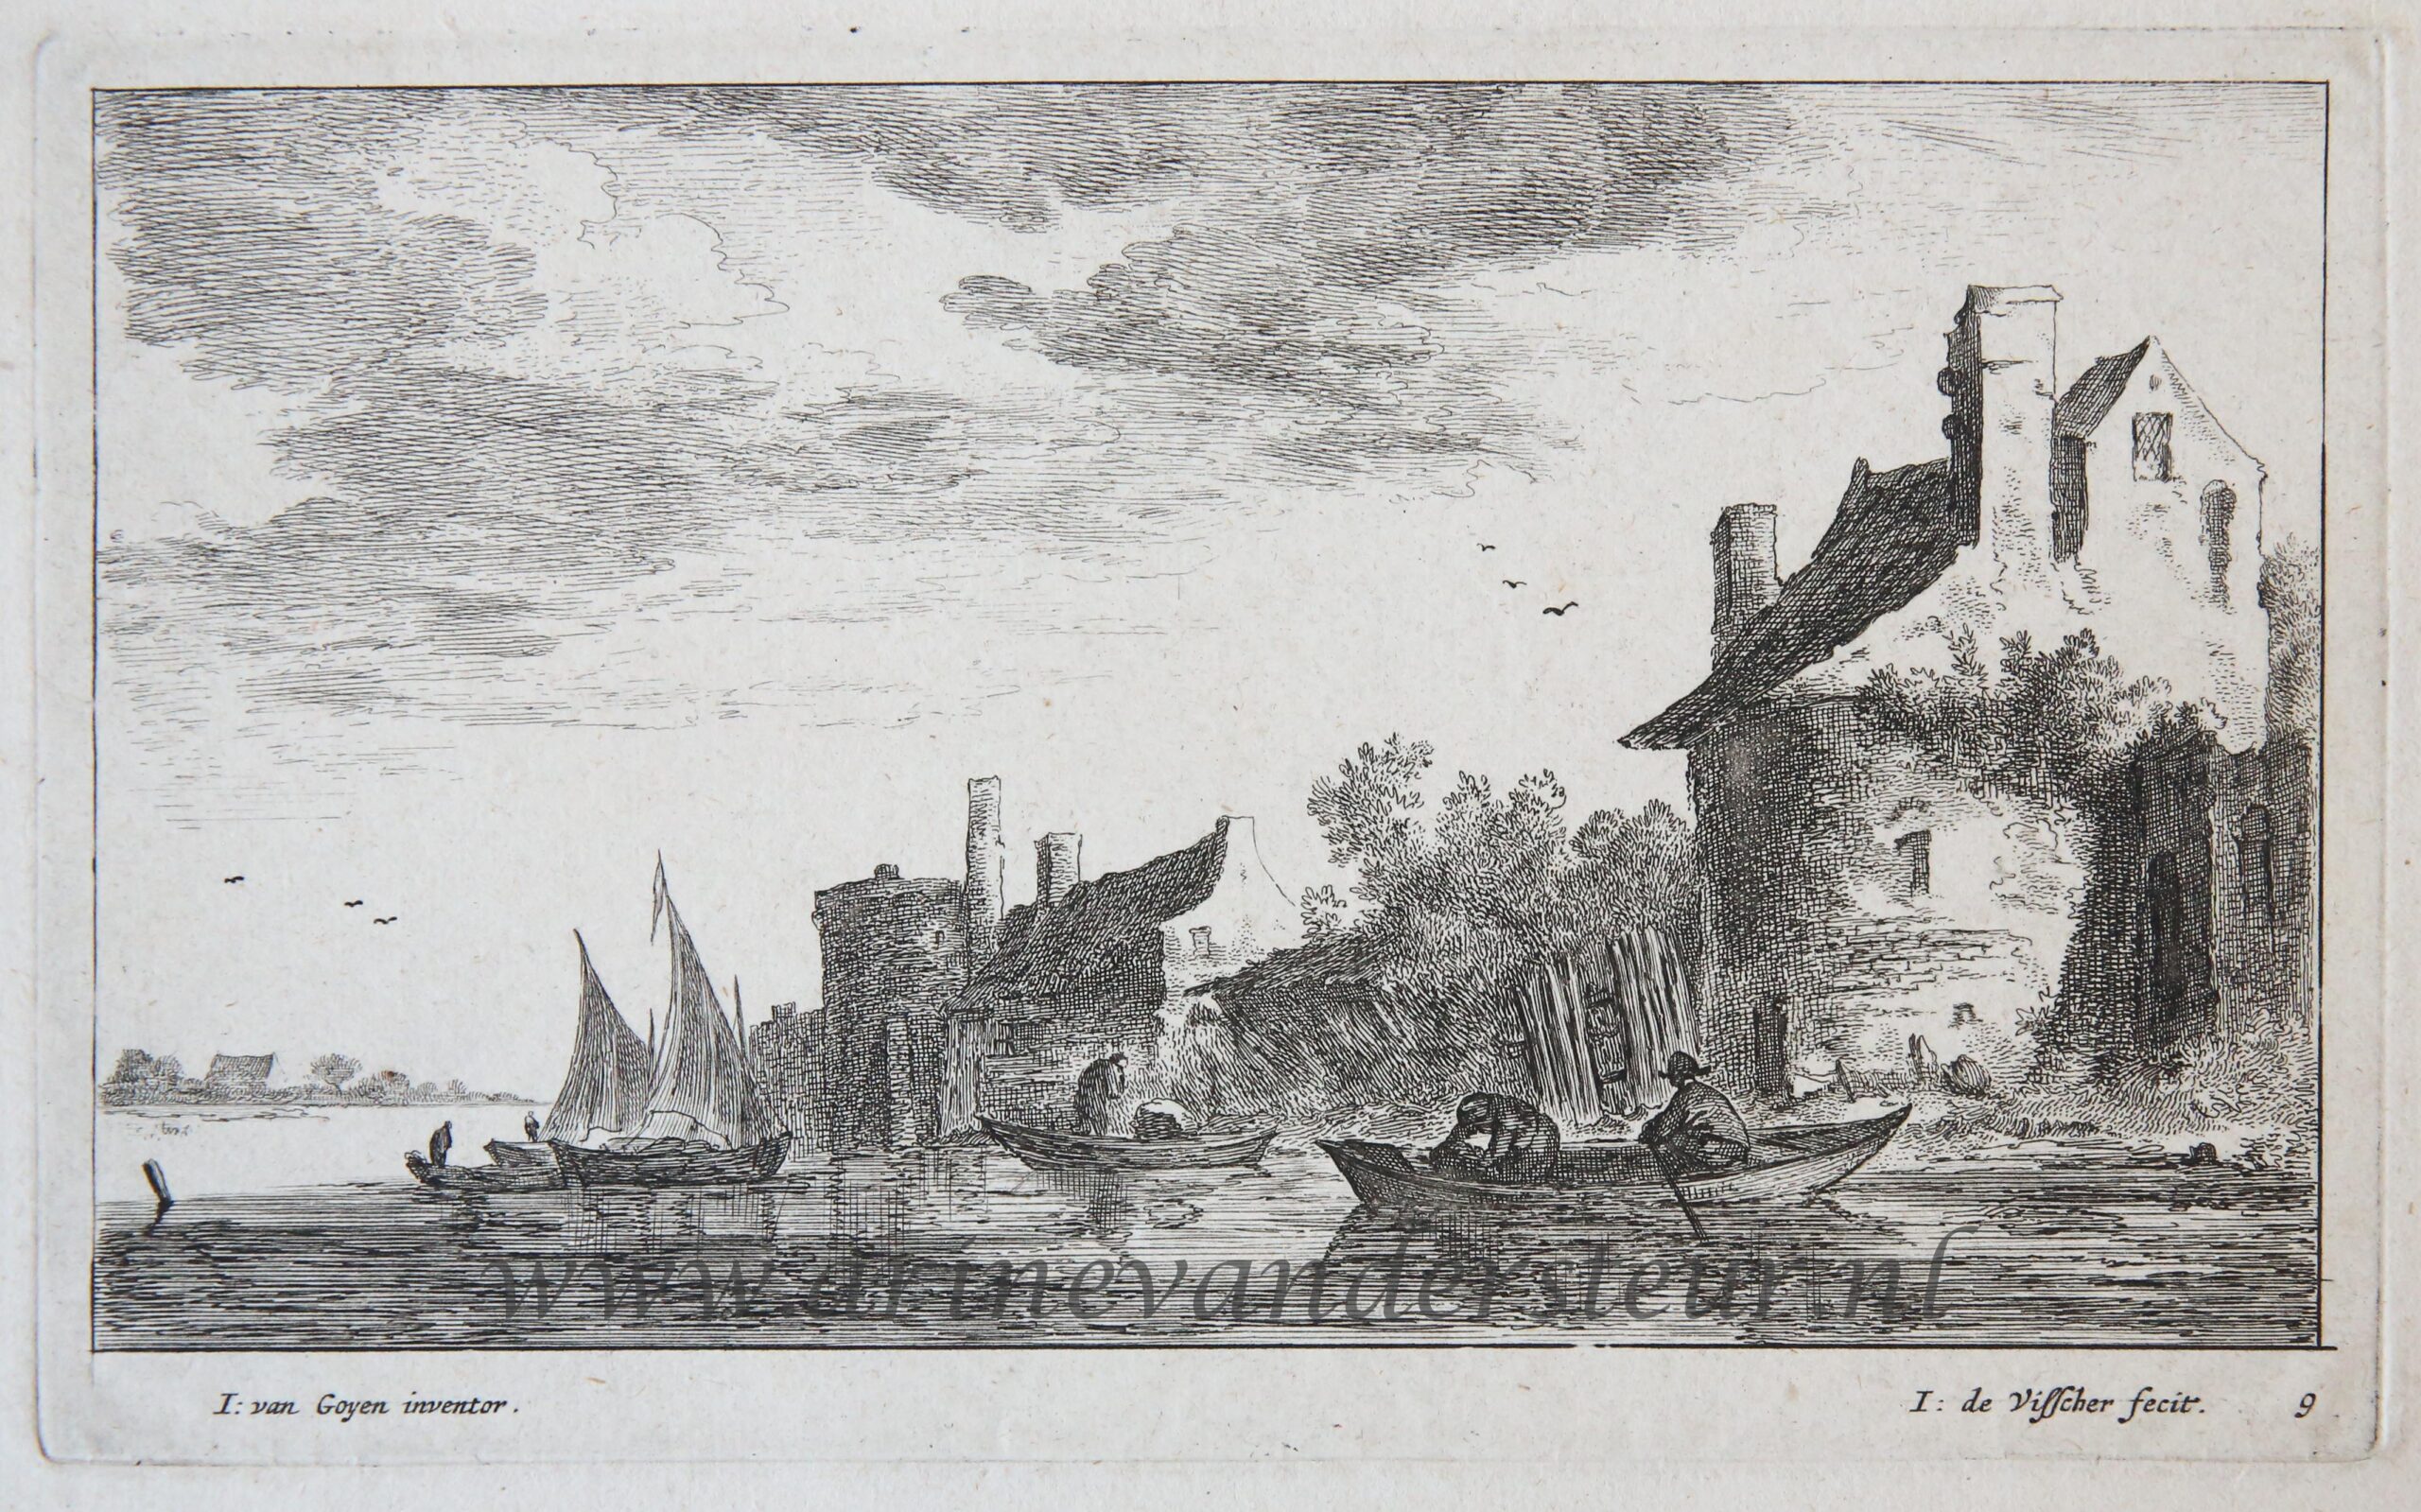 [Antique print, etching and engraving] River landscape [Regiunculæ Amoenissimæ eleganter delineate Johanne van Goyen et æri incisæ per Johannem de Visscher], published after 1653.